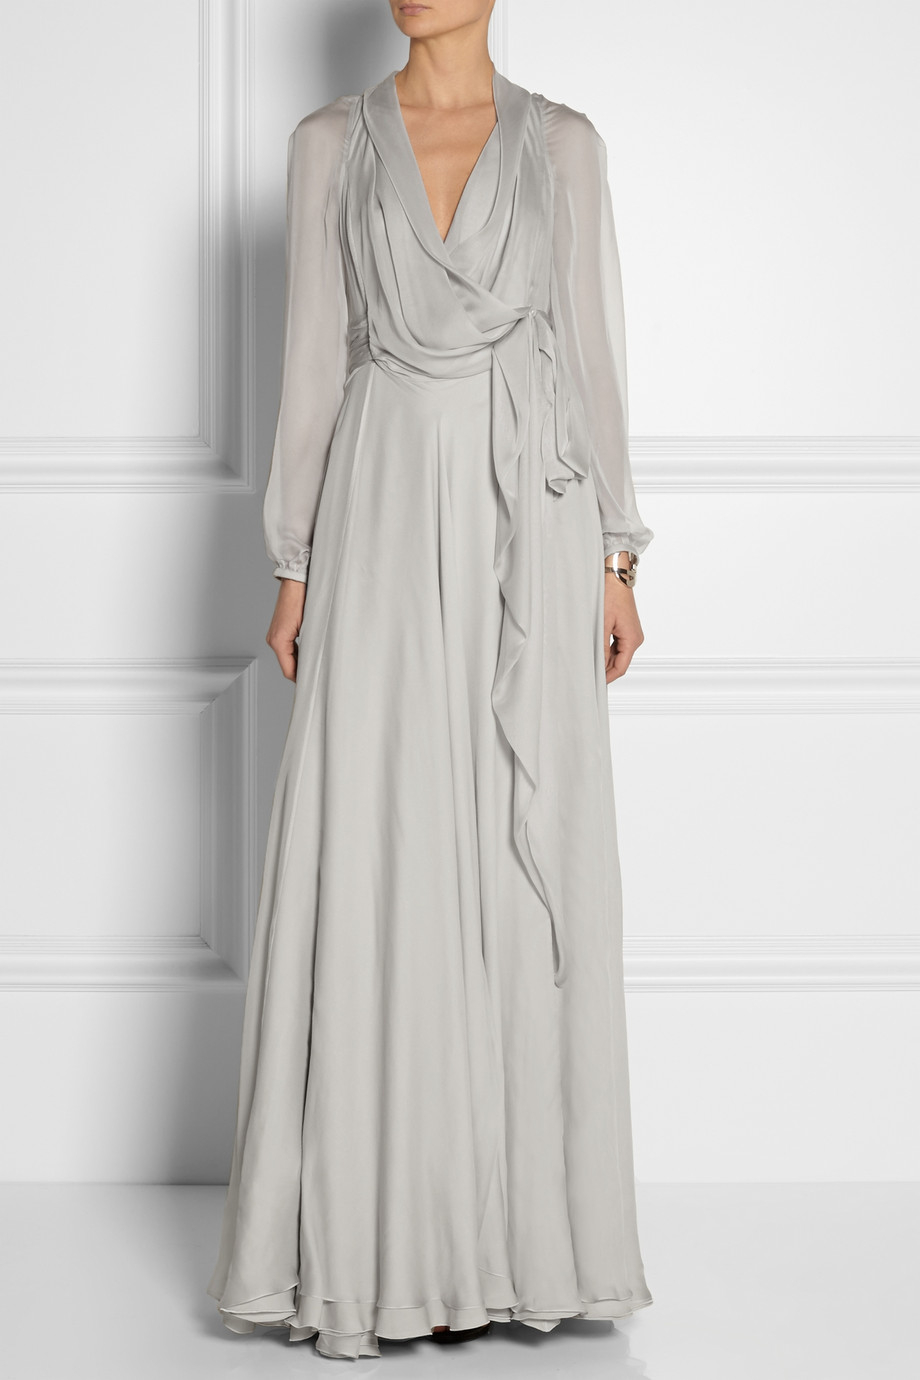 Saint Laurent Wrap-Effect Silk-Mousseline Gown in Gray - Lyst